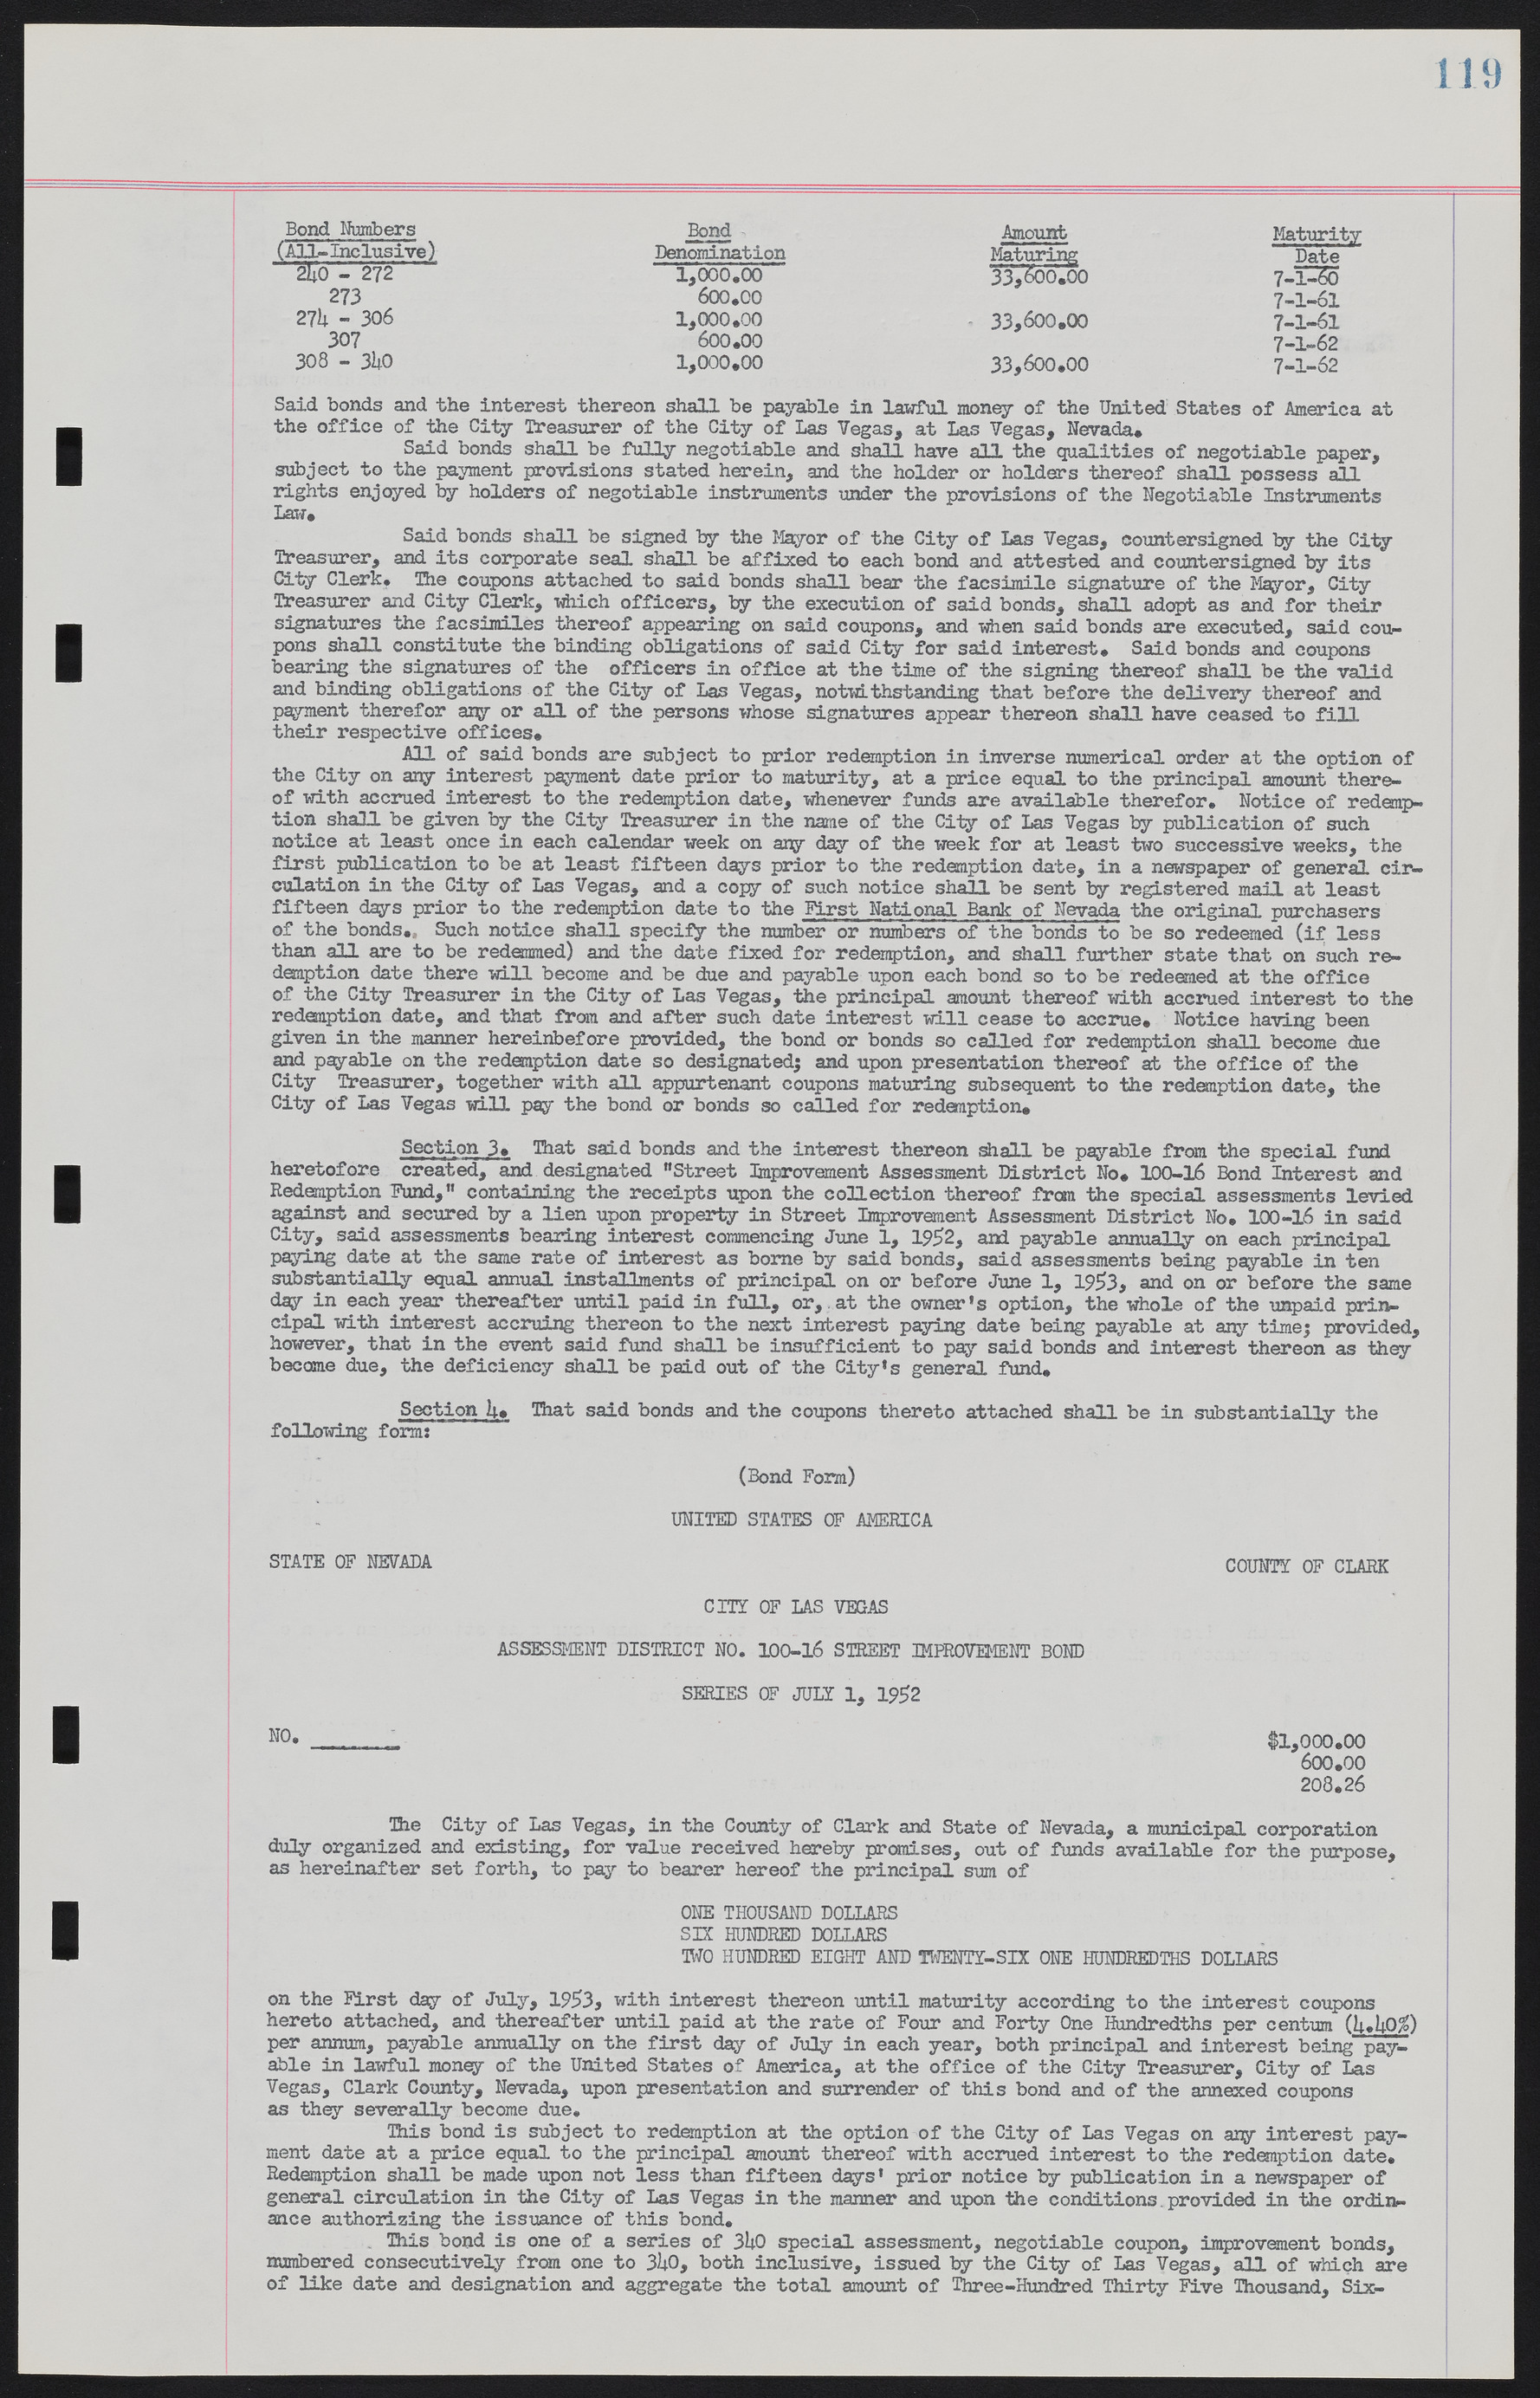 Las Vegas City Ordinances, November 13, 1950 to August 6, 1958, lvc000015-127